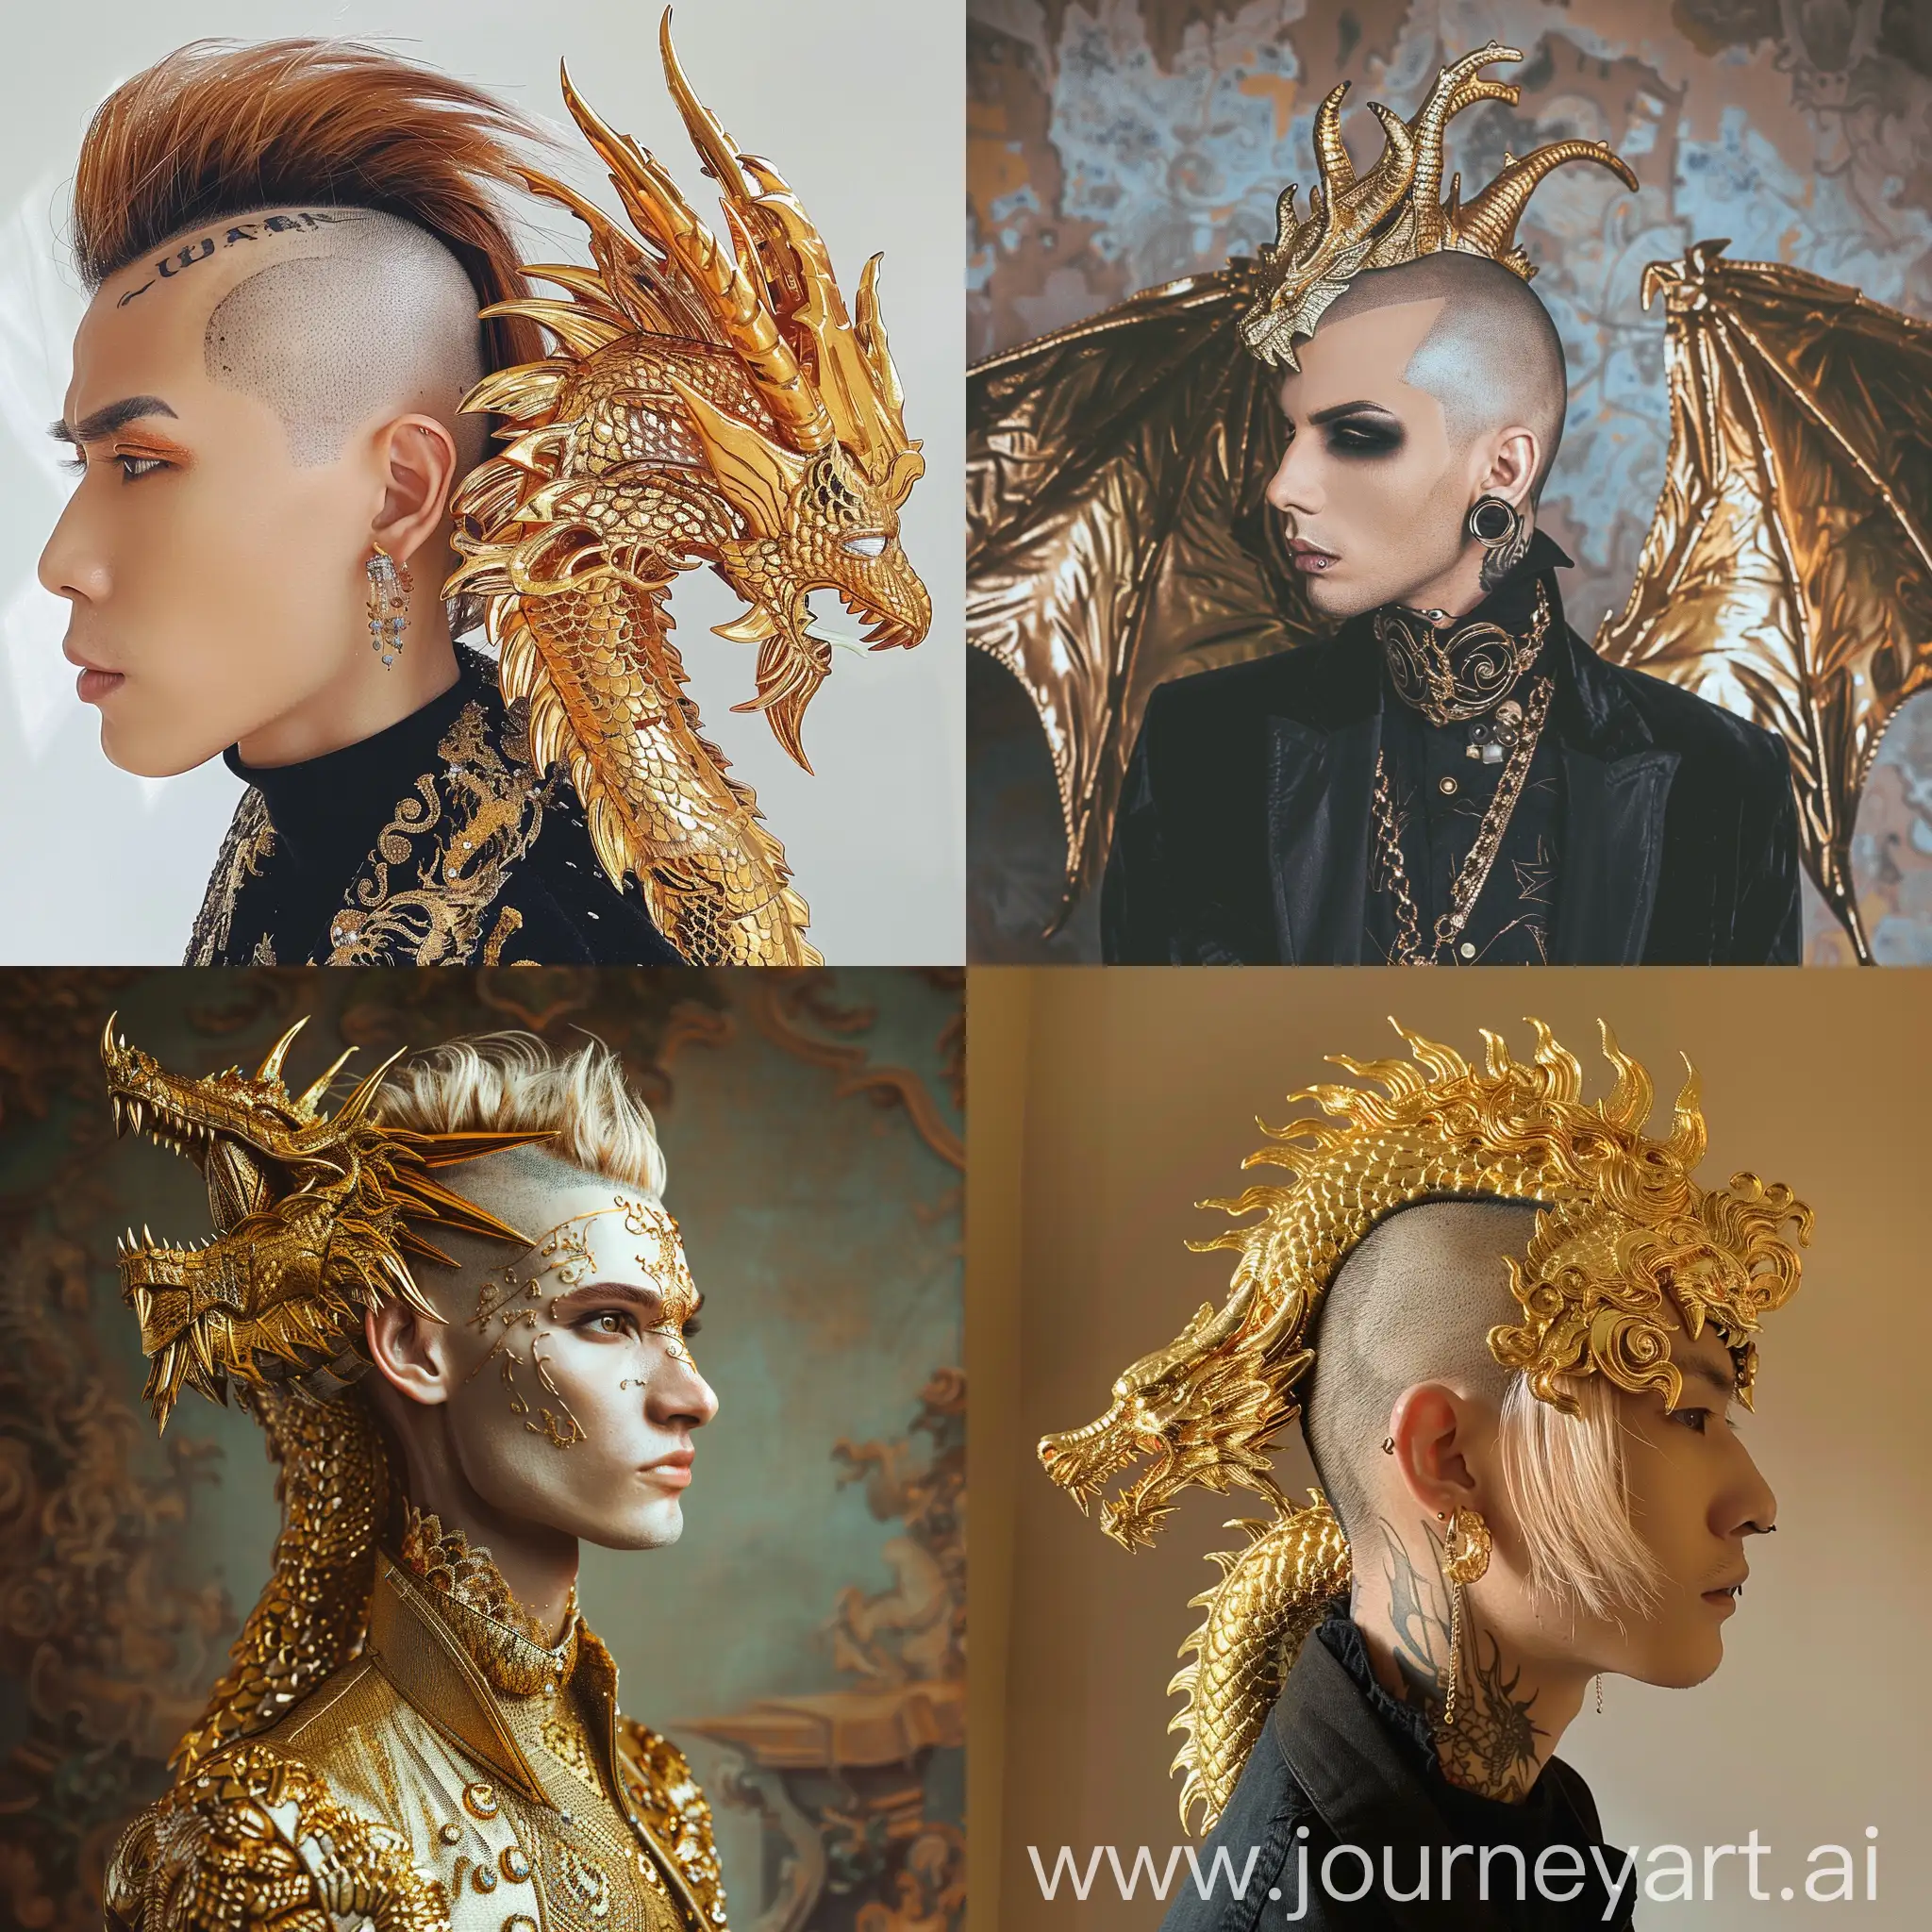 Mystical-Golden-Dragon-Vampire-with-Half-Shaved-Head